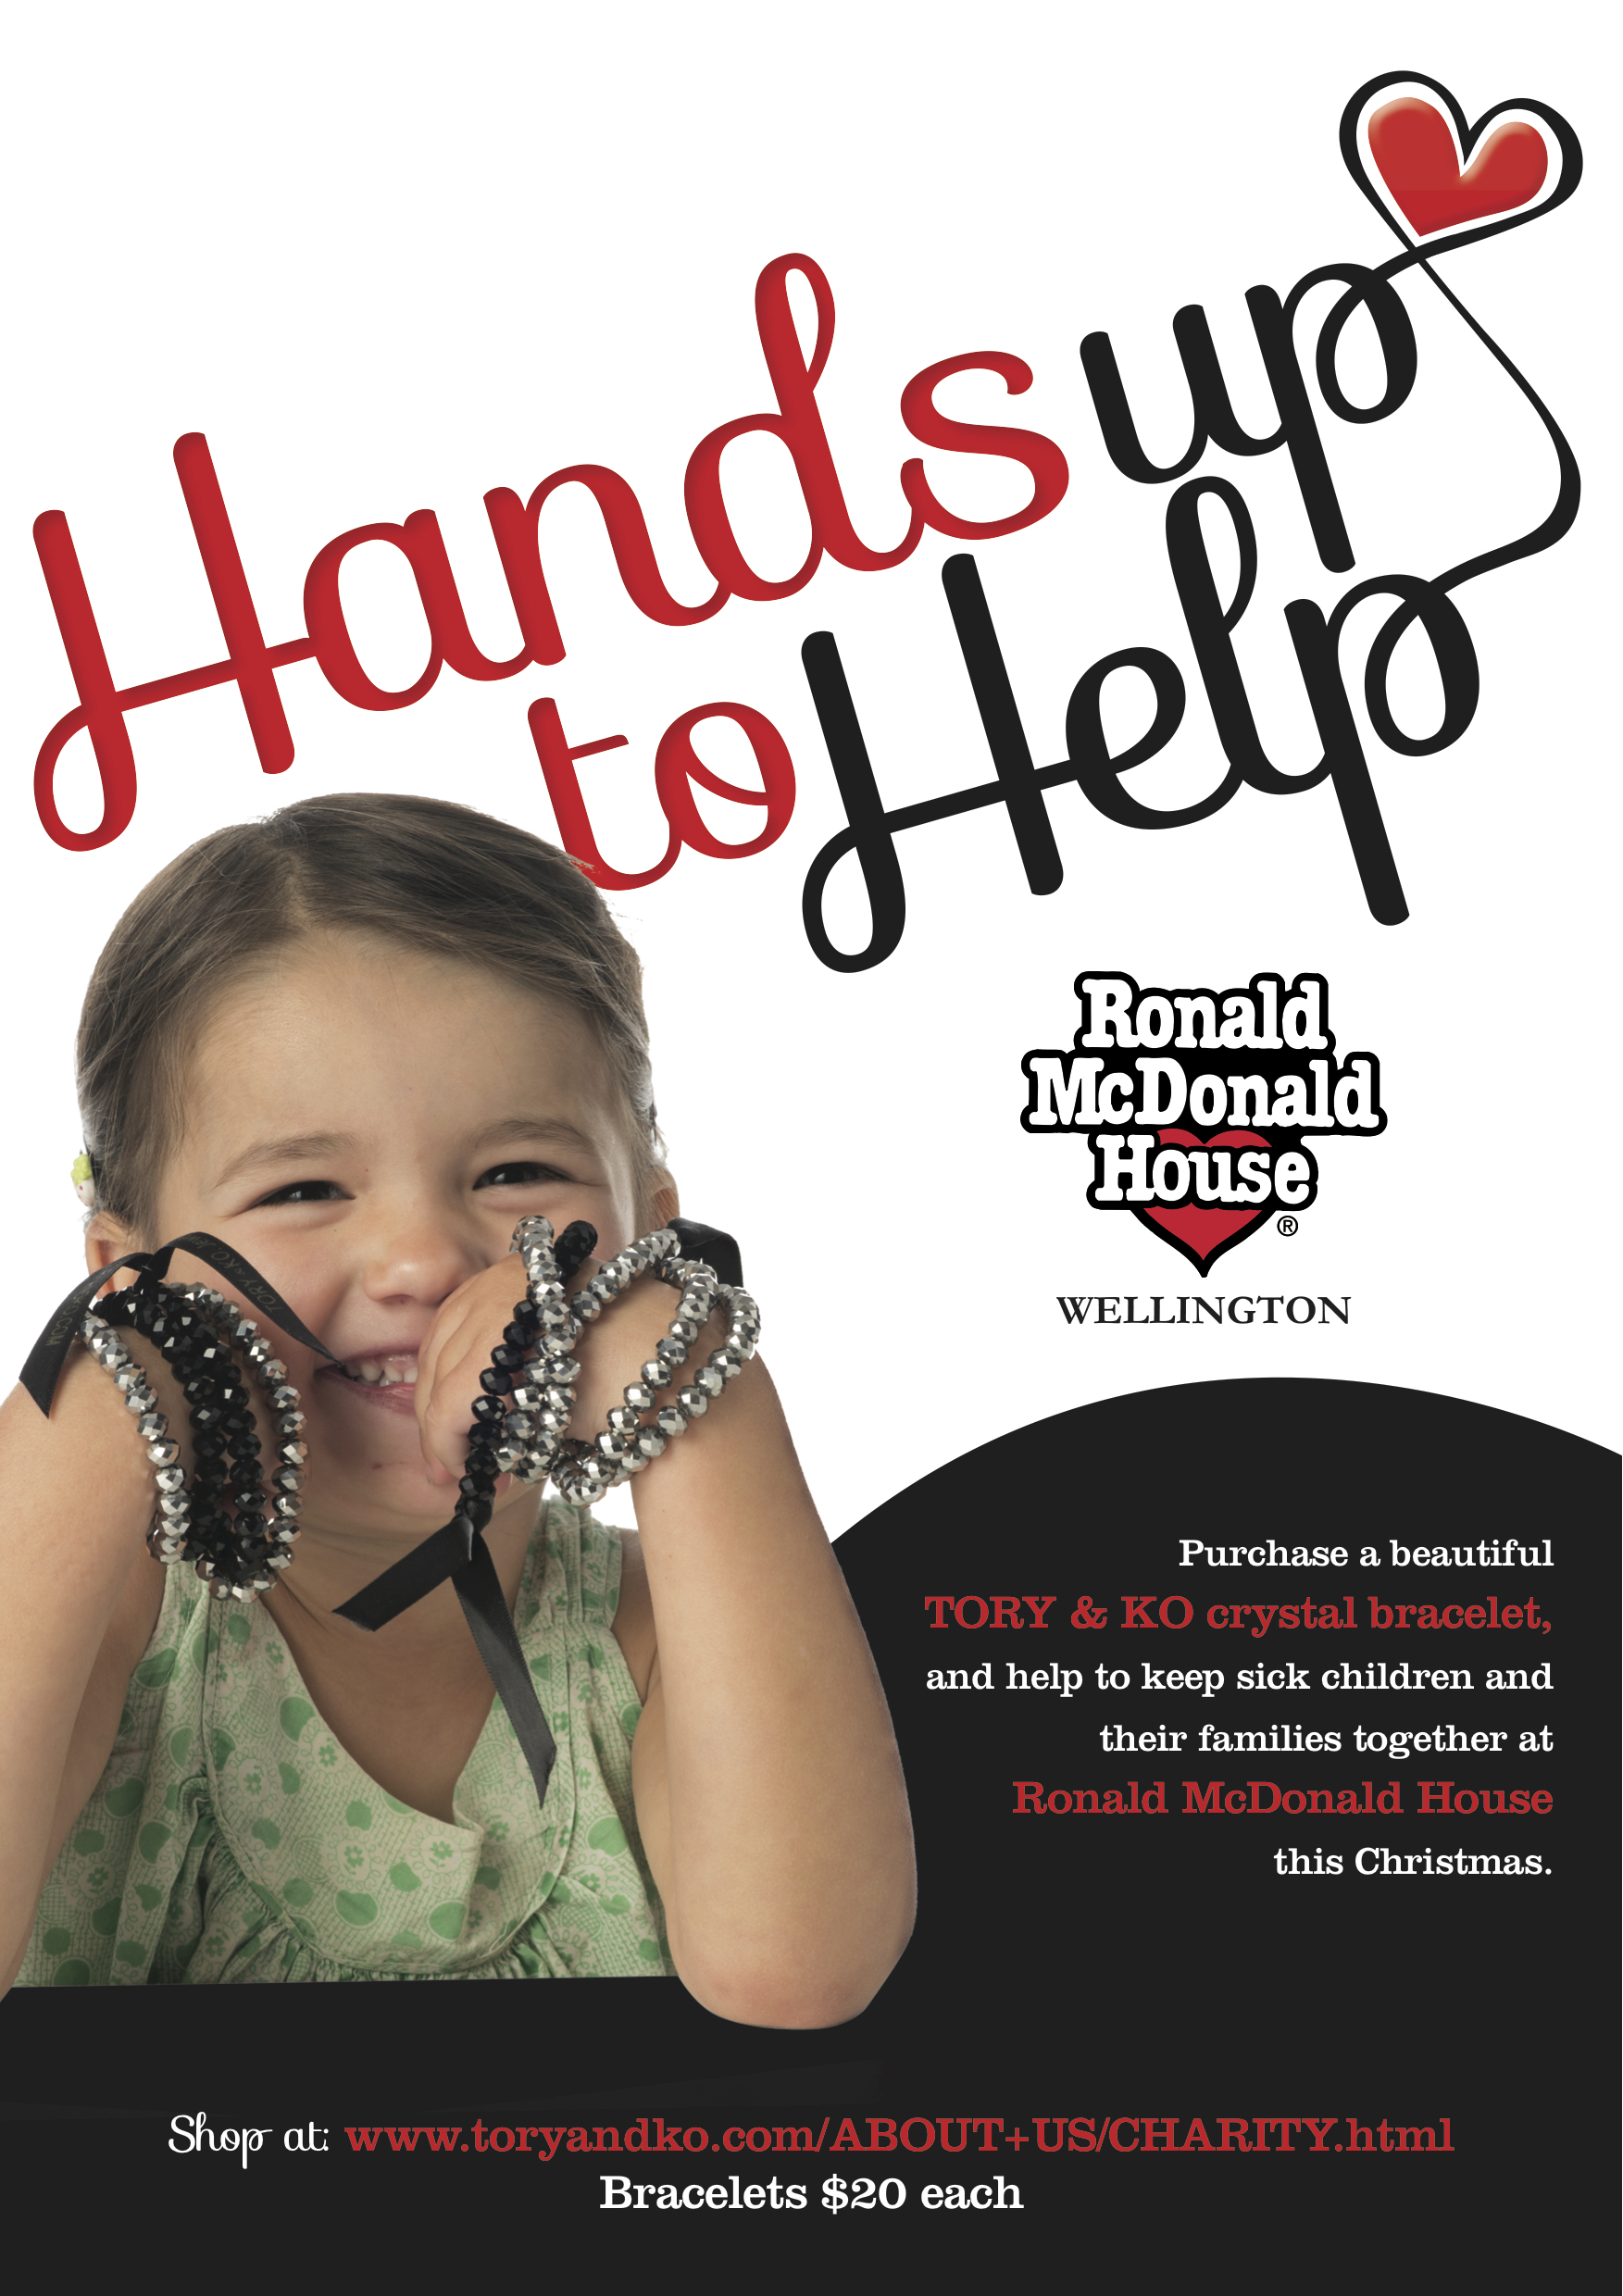 Ronald McDonald Hands up to Help Poster.jpg